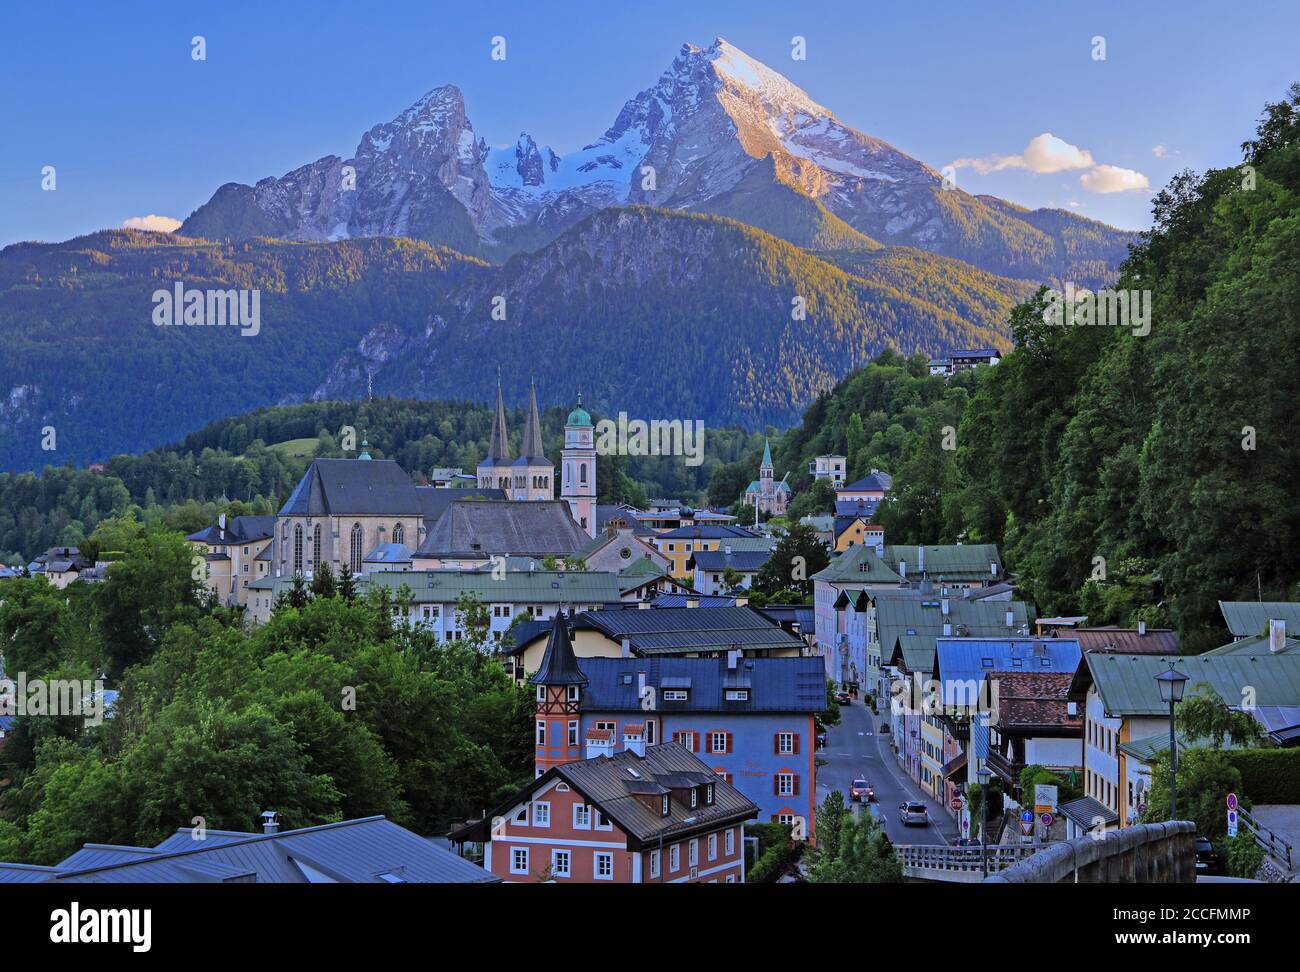 Town center against the Watzmann (2713m), Berchtesgaden, Berchtesgadener Land, Upper Bavaria, Bavaria, Germany Stock Photo